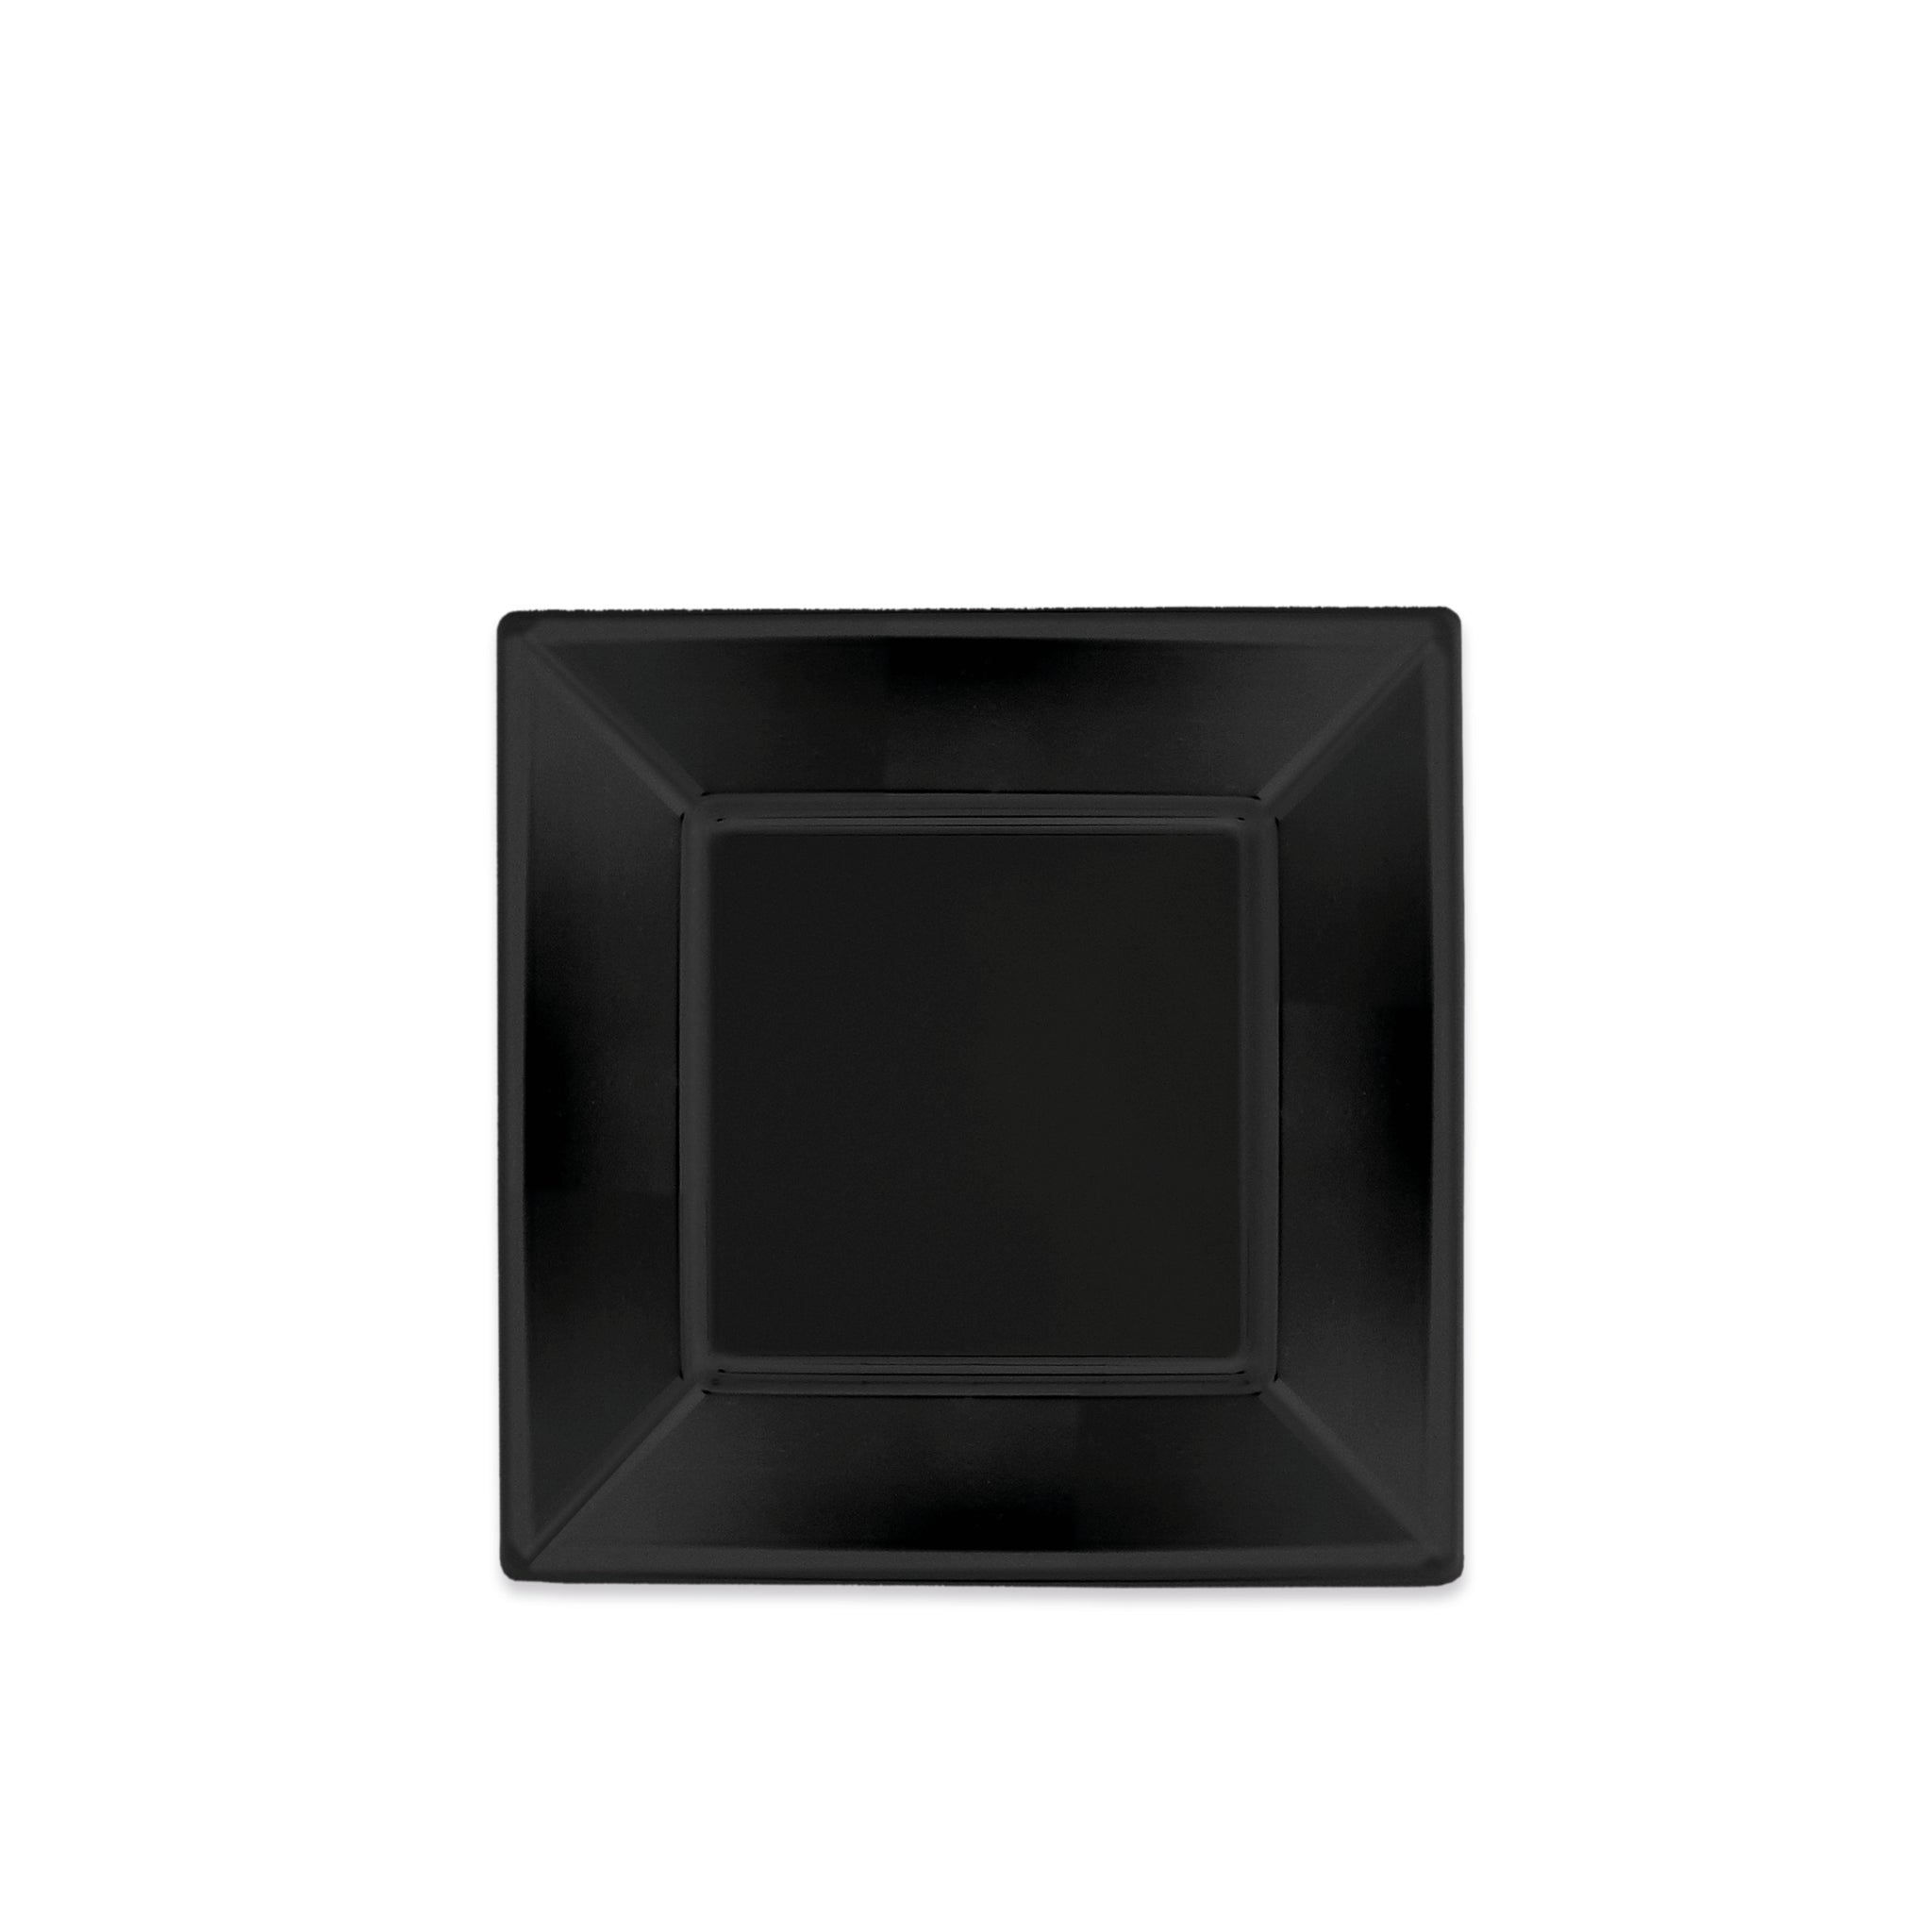 Square plastic plate 23 x 23 cm black